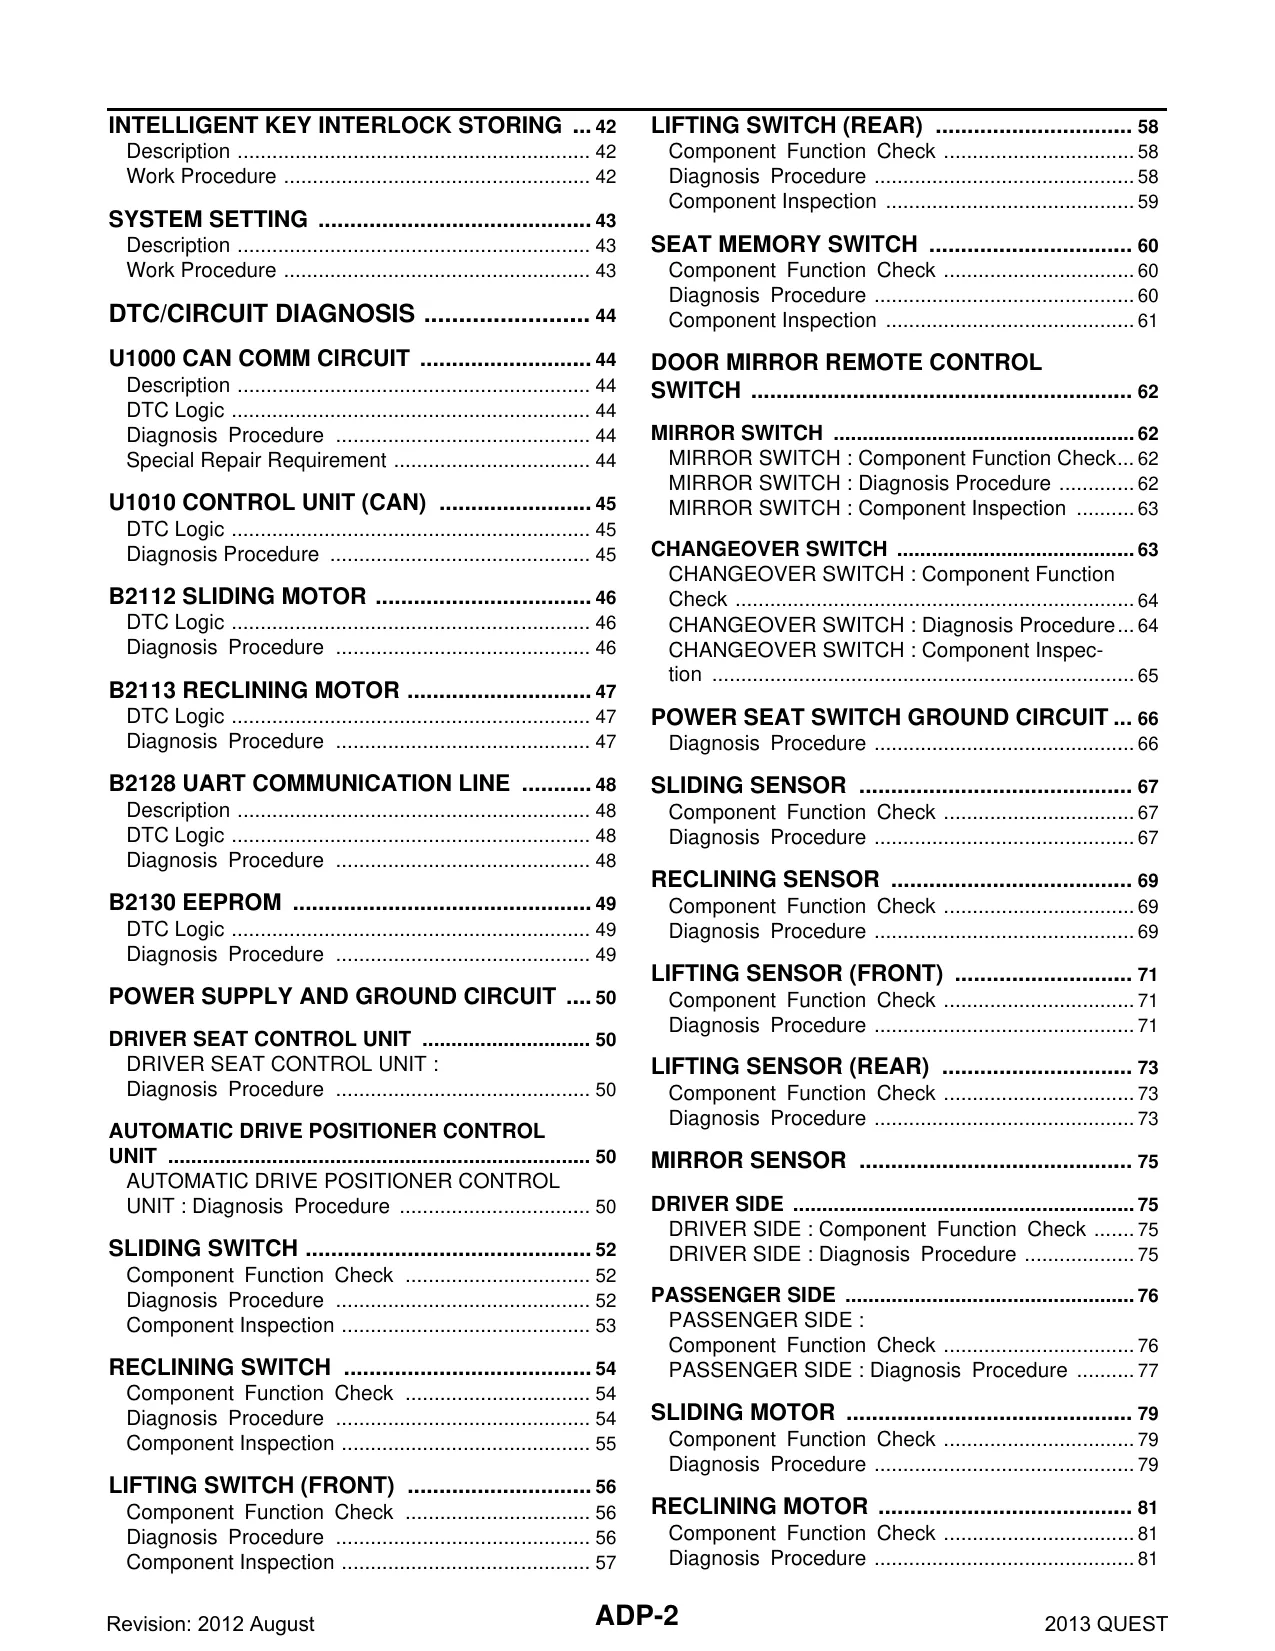 2013 Nissan Quest  E52 series repair manual Preview image 2